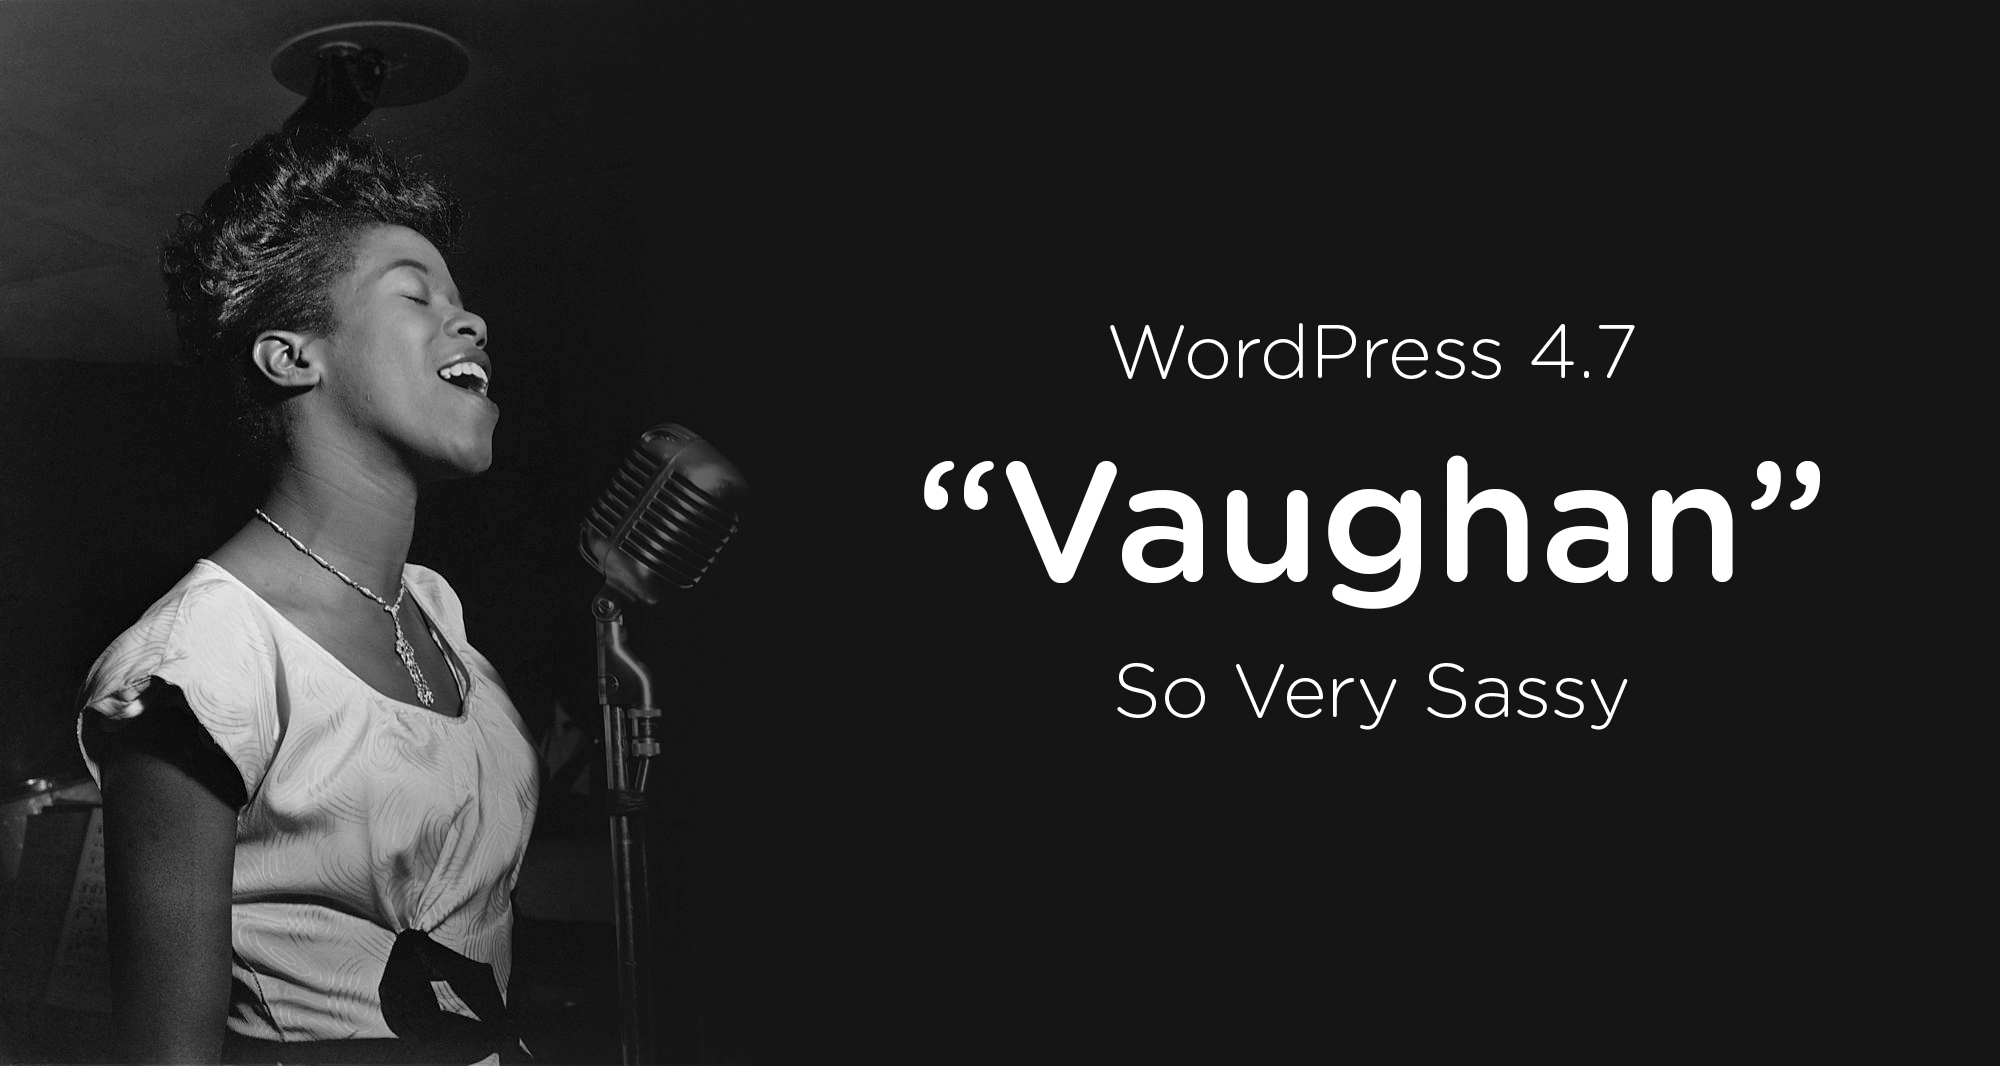 WordPress 4.7, “Vaughan”, released